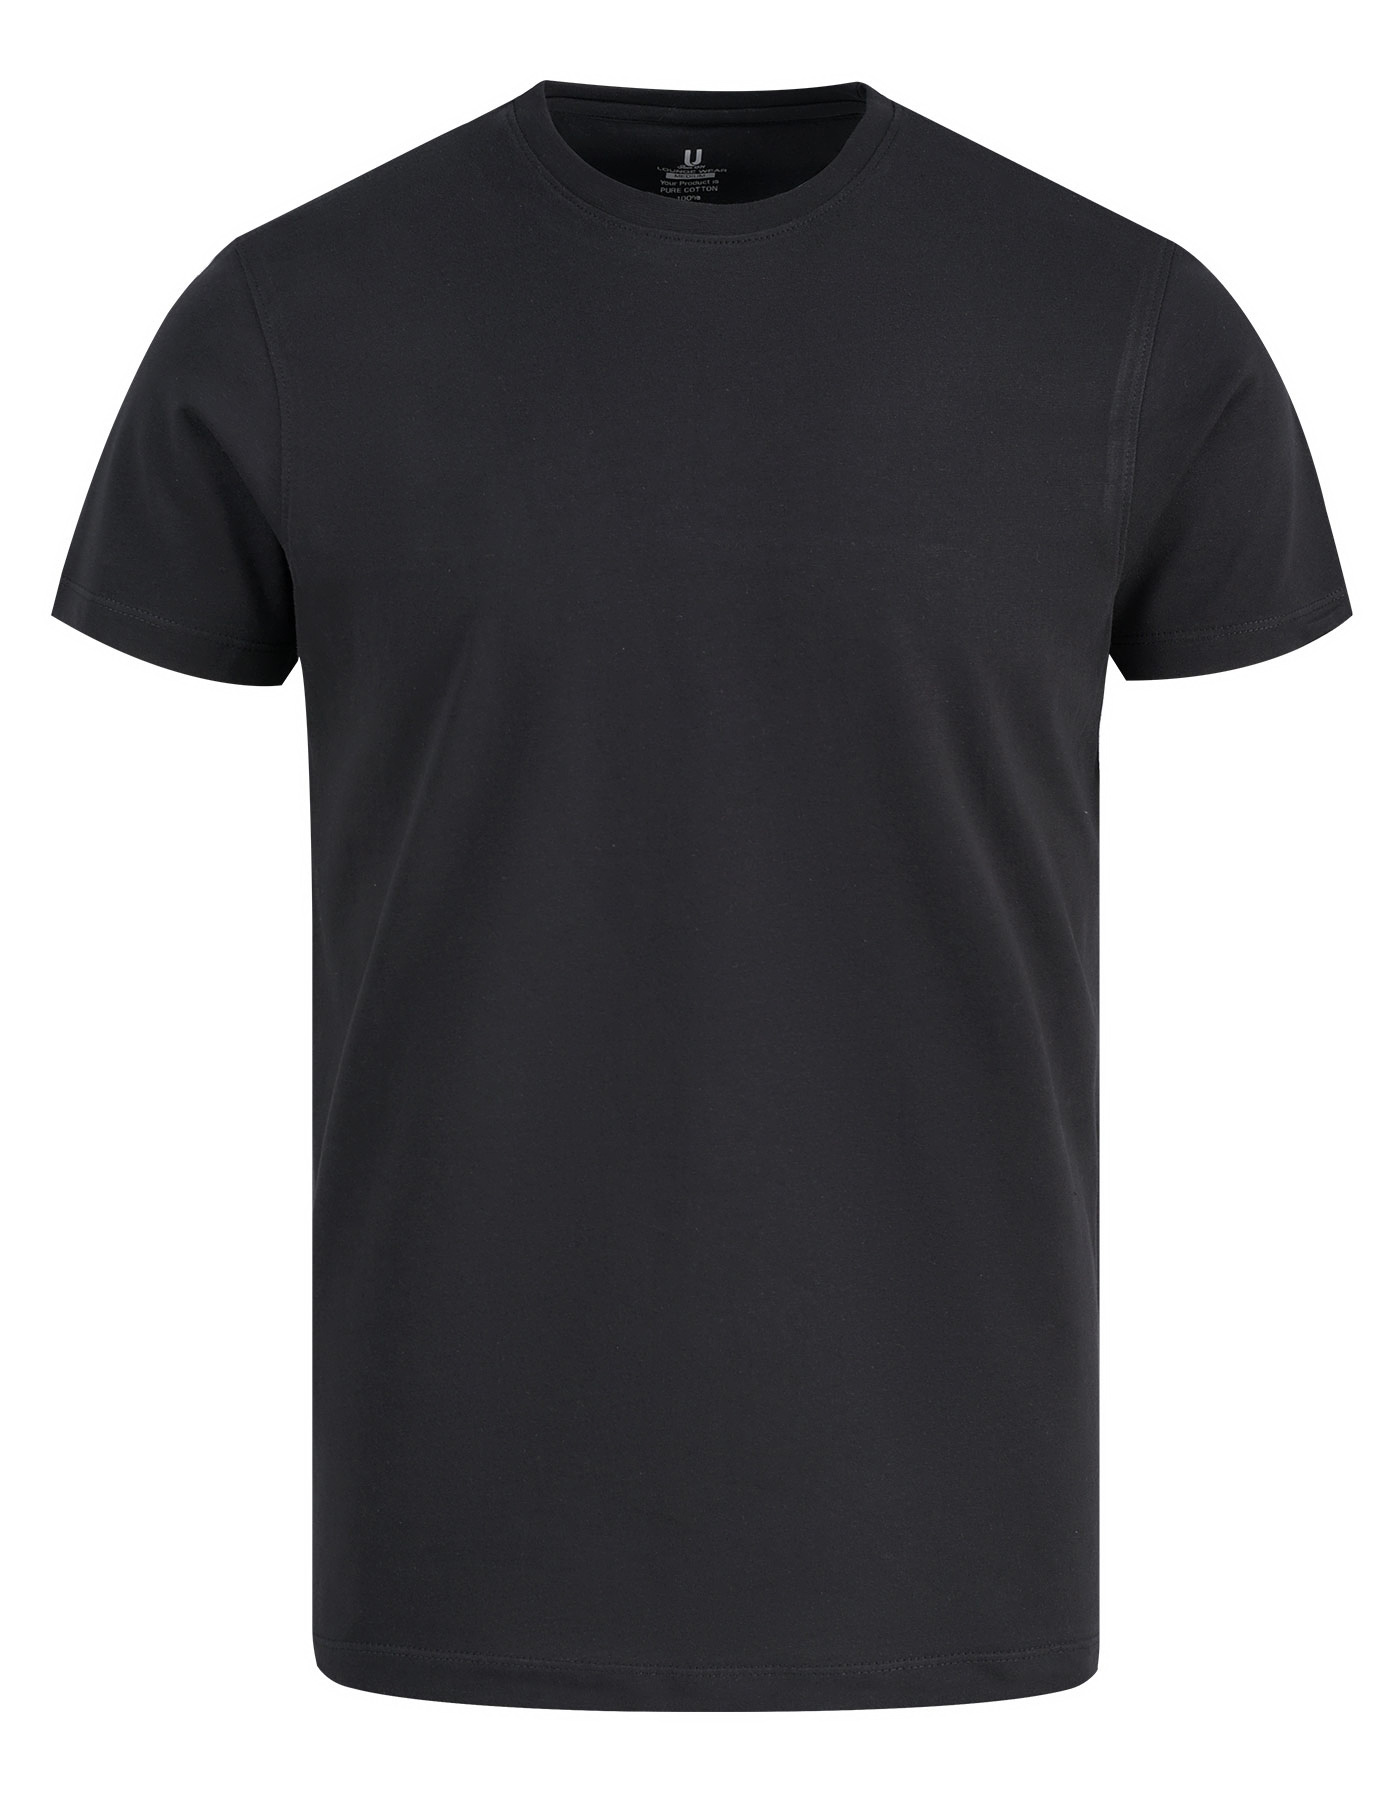 Buy Black T shirt Pajama Set For Men Online Shopping in Pakistan | Uniworth